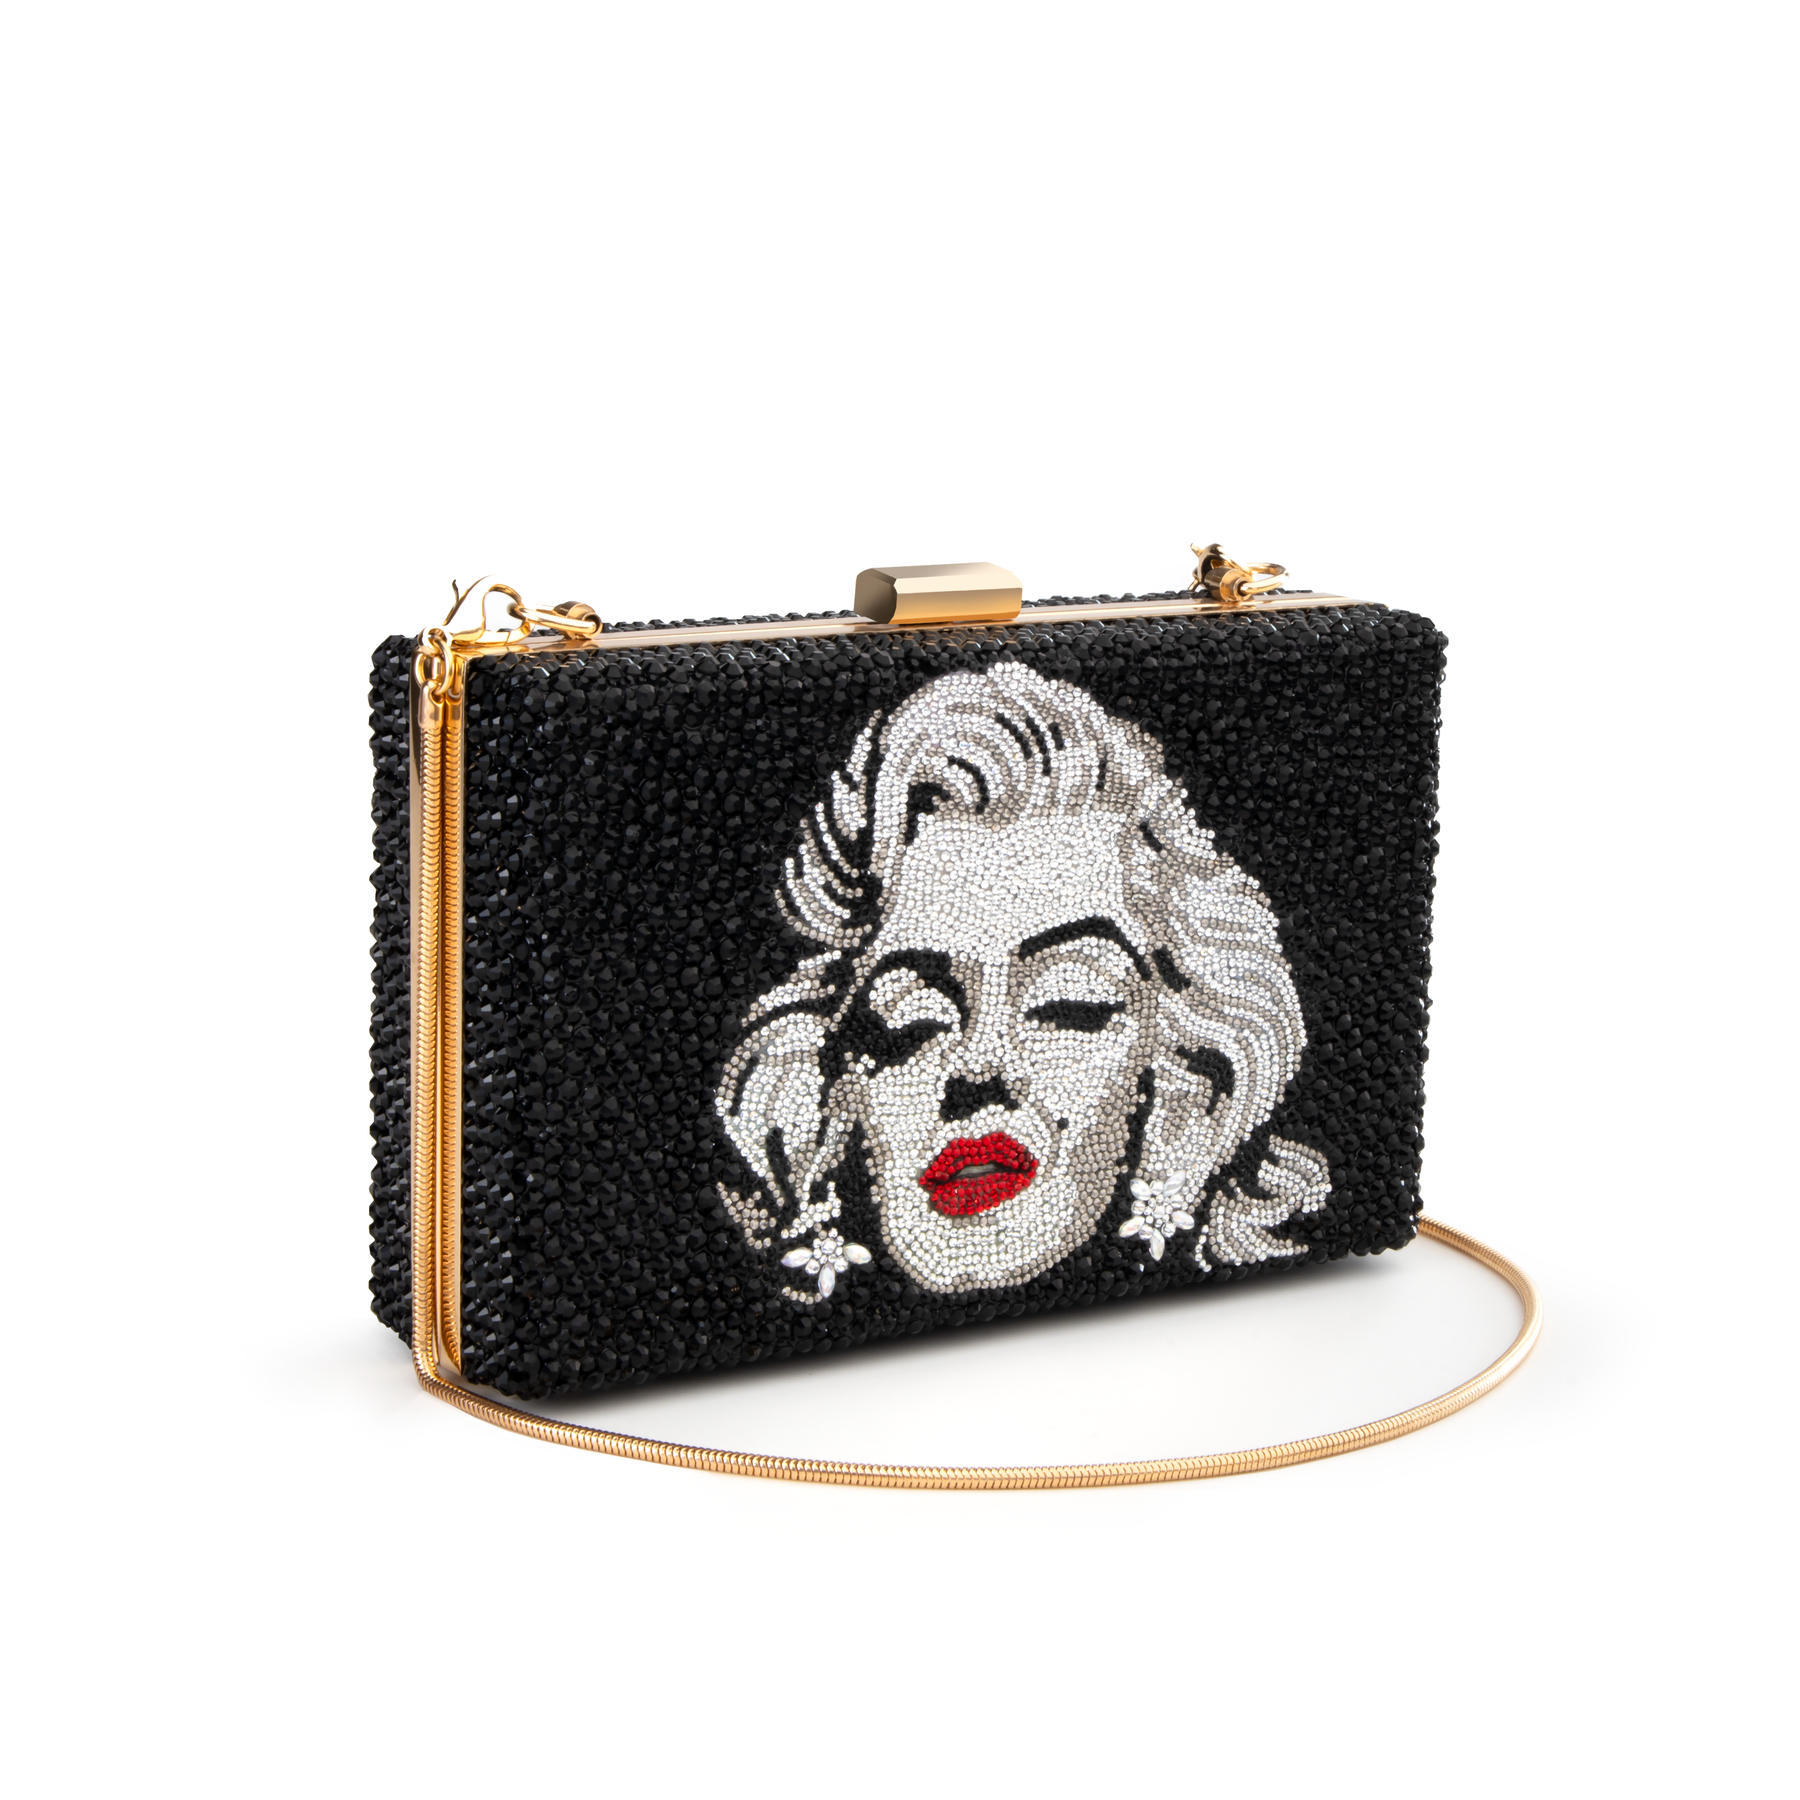 marilyn monroe purses | eBay